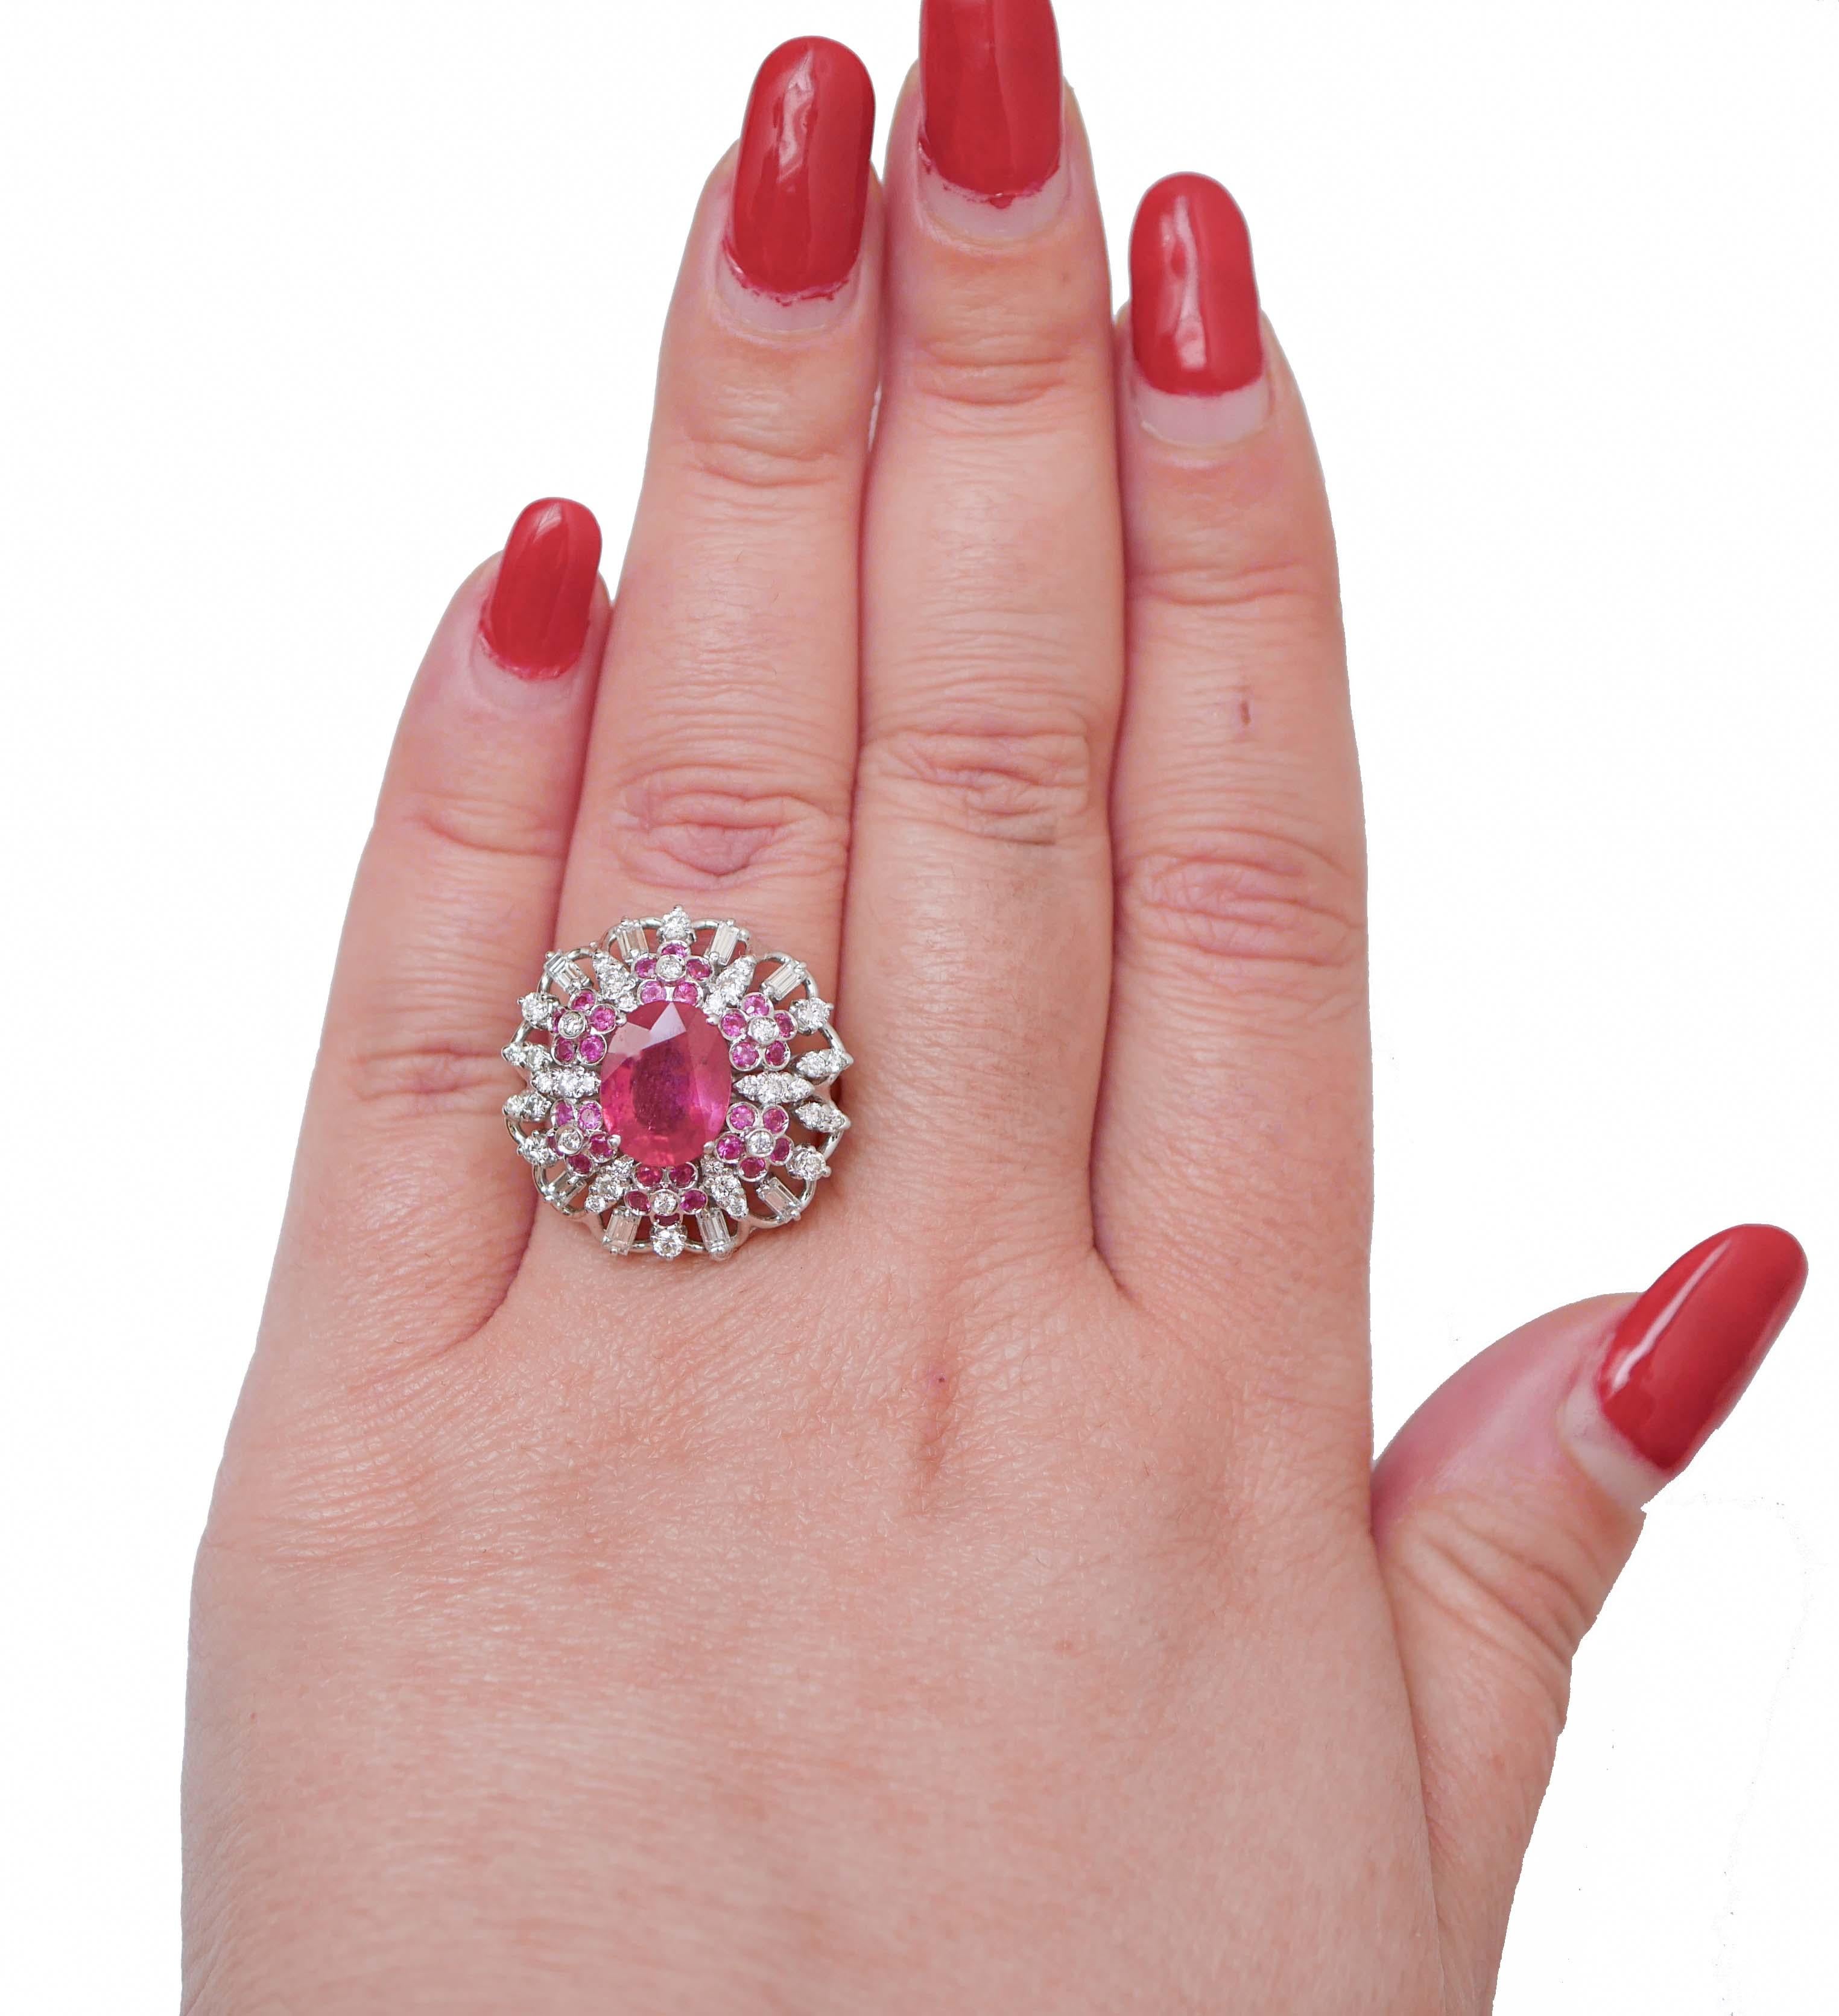 Mixed Cut Rubies, Diamonds, 18 Karat White Gold Ring. For Sale